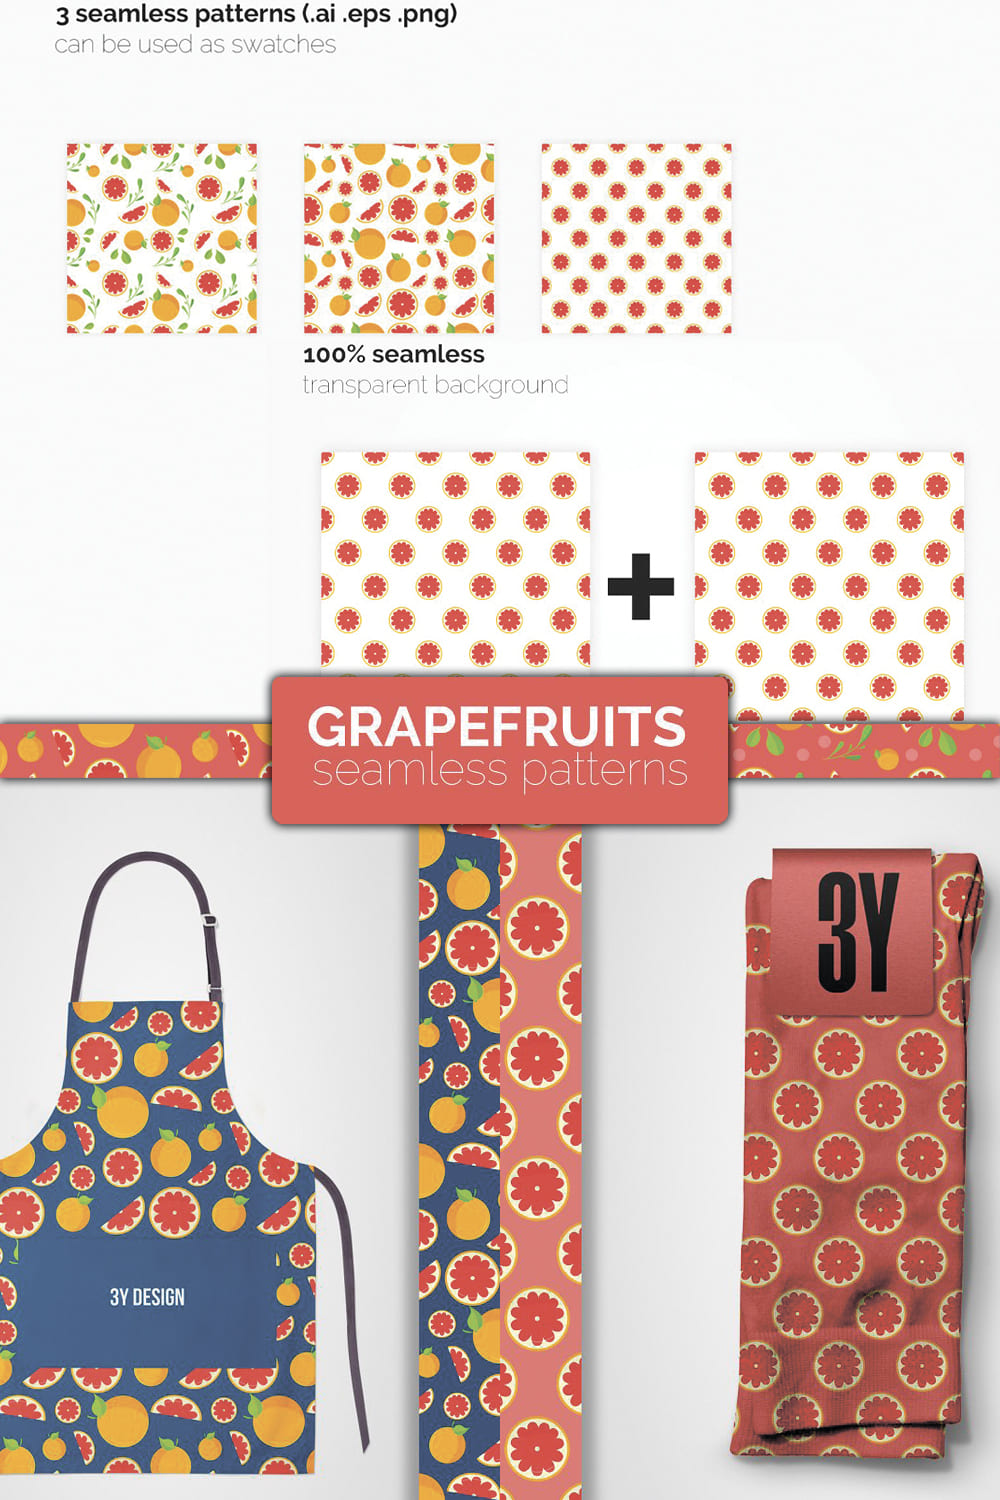 Grapefruits Seamless Patterns pinterest image.